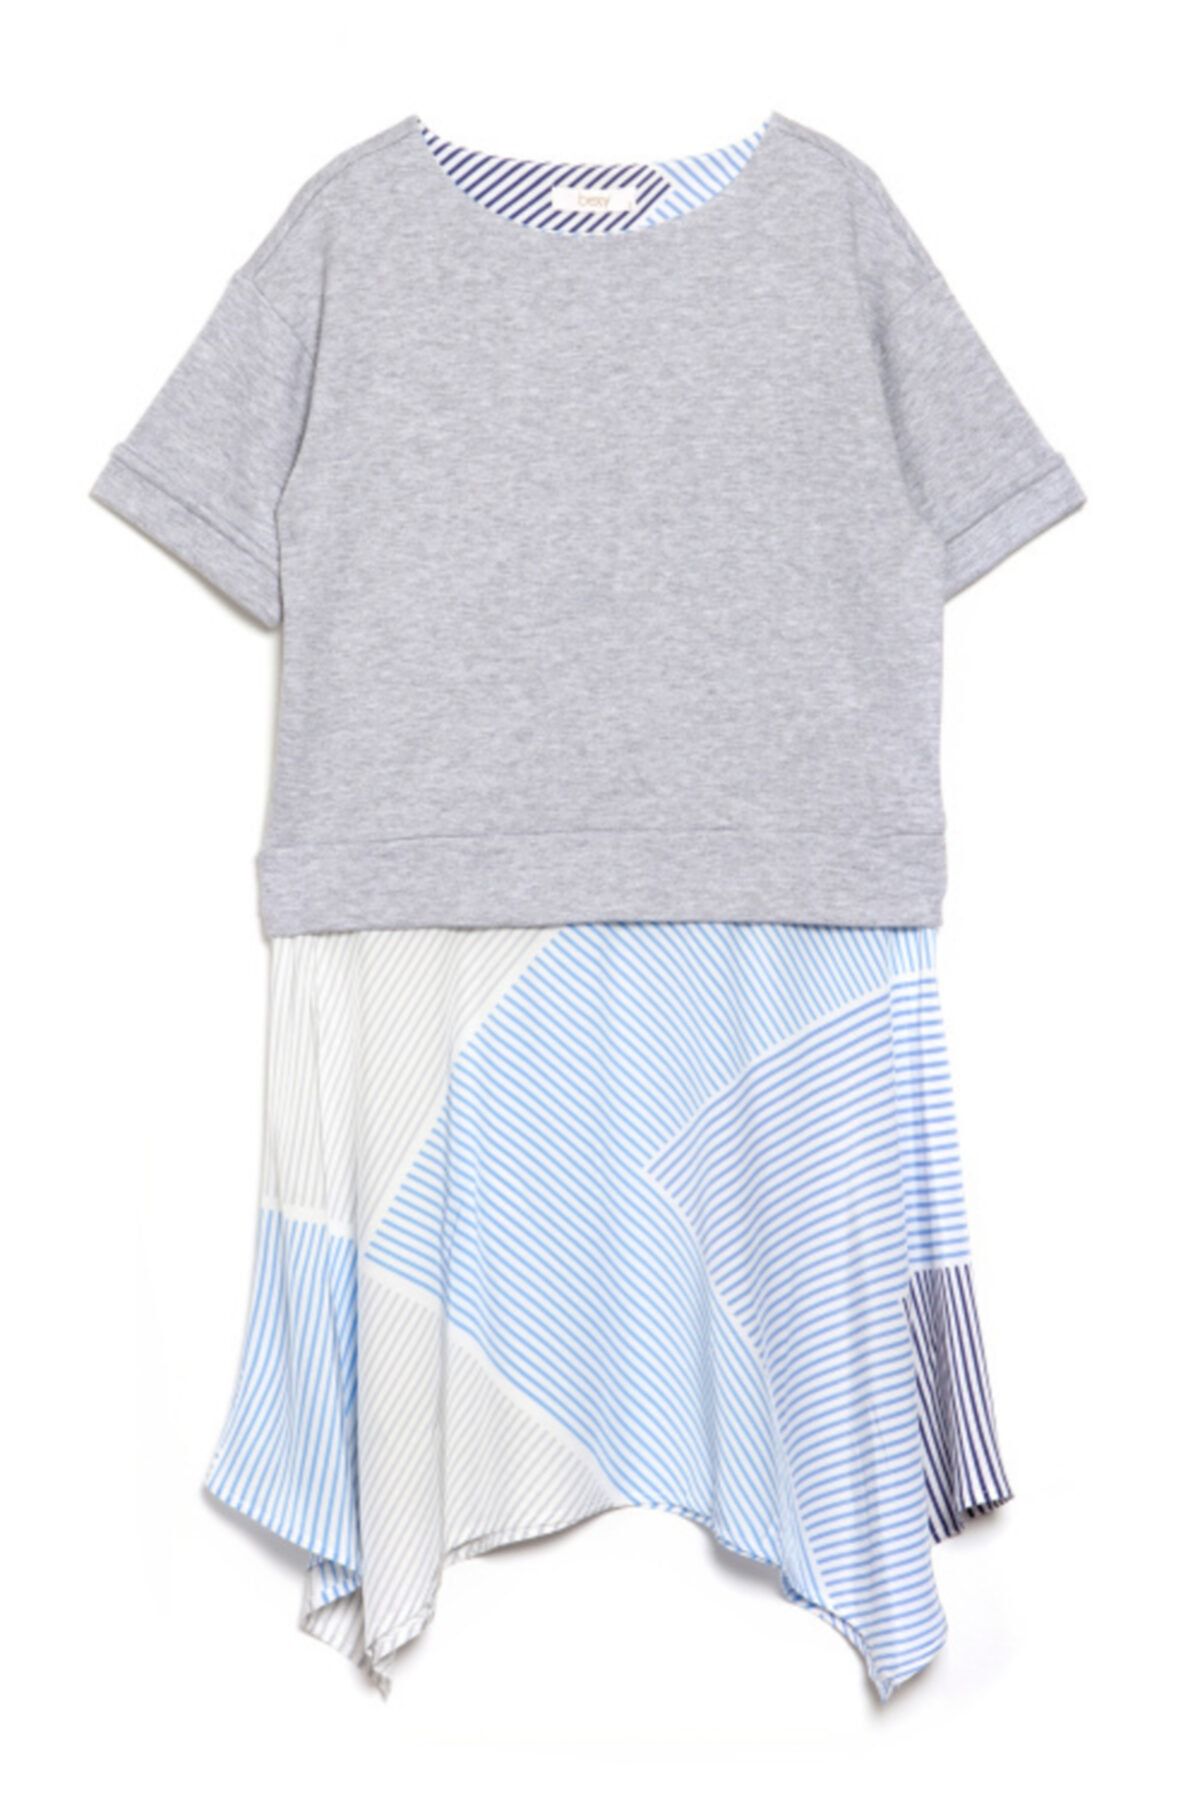 Bexy Kadın Gri  Çizgili Sweatshirt Elbise 160220-1